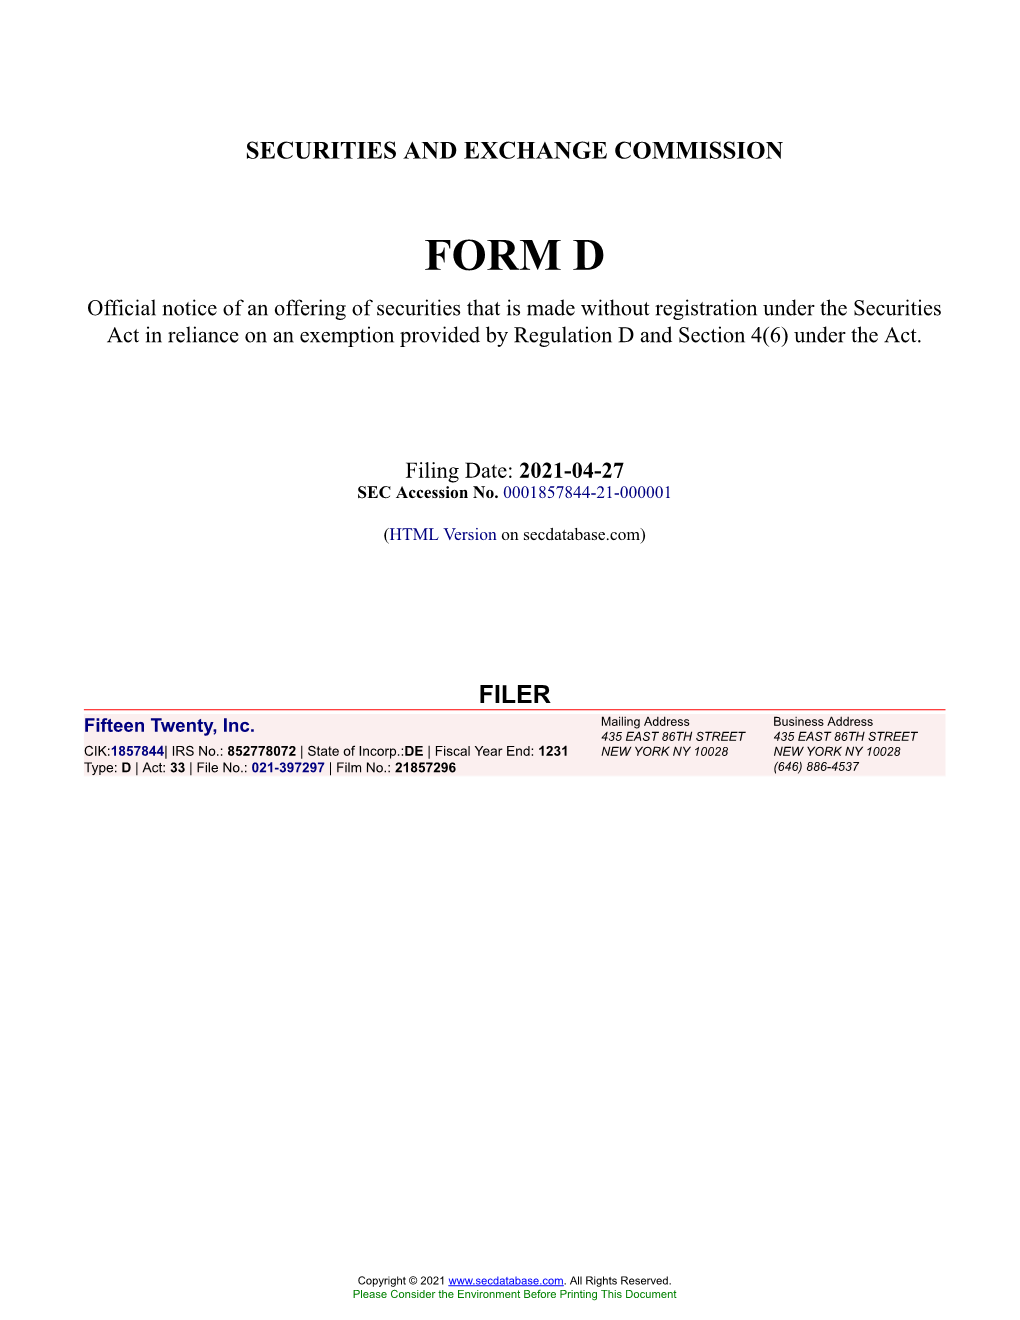 Fifteen Twenty, Inc. Form D Filed 2021-04-27